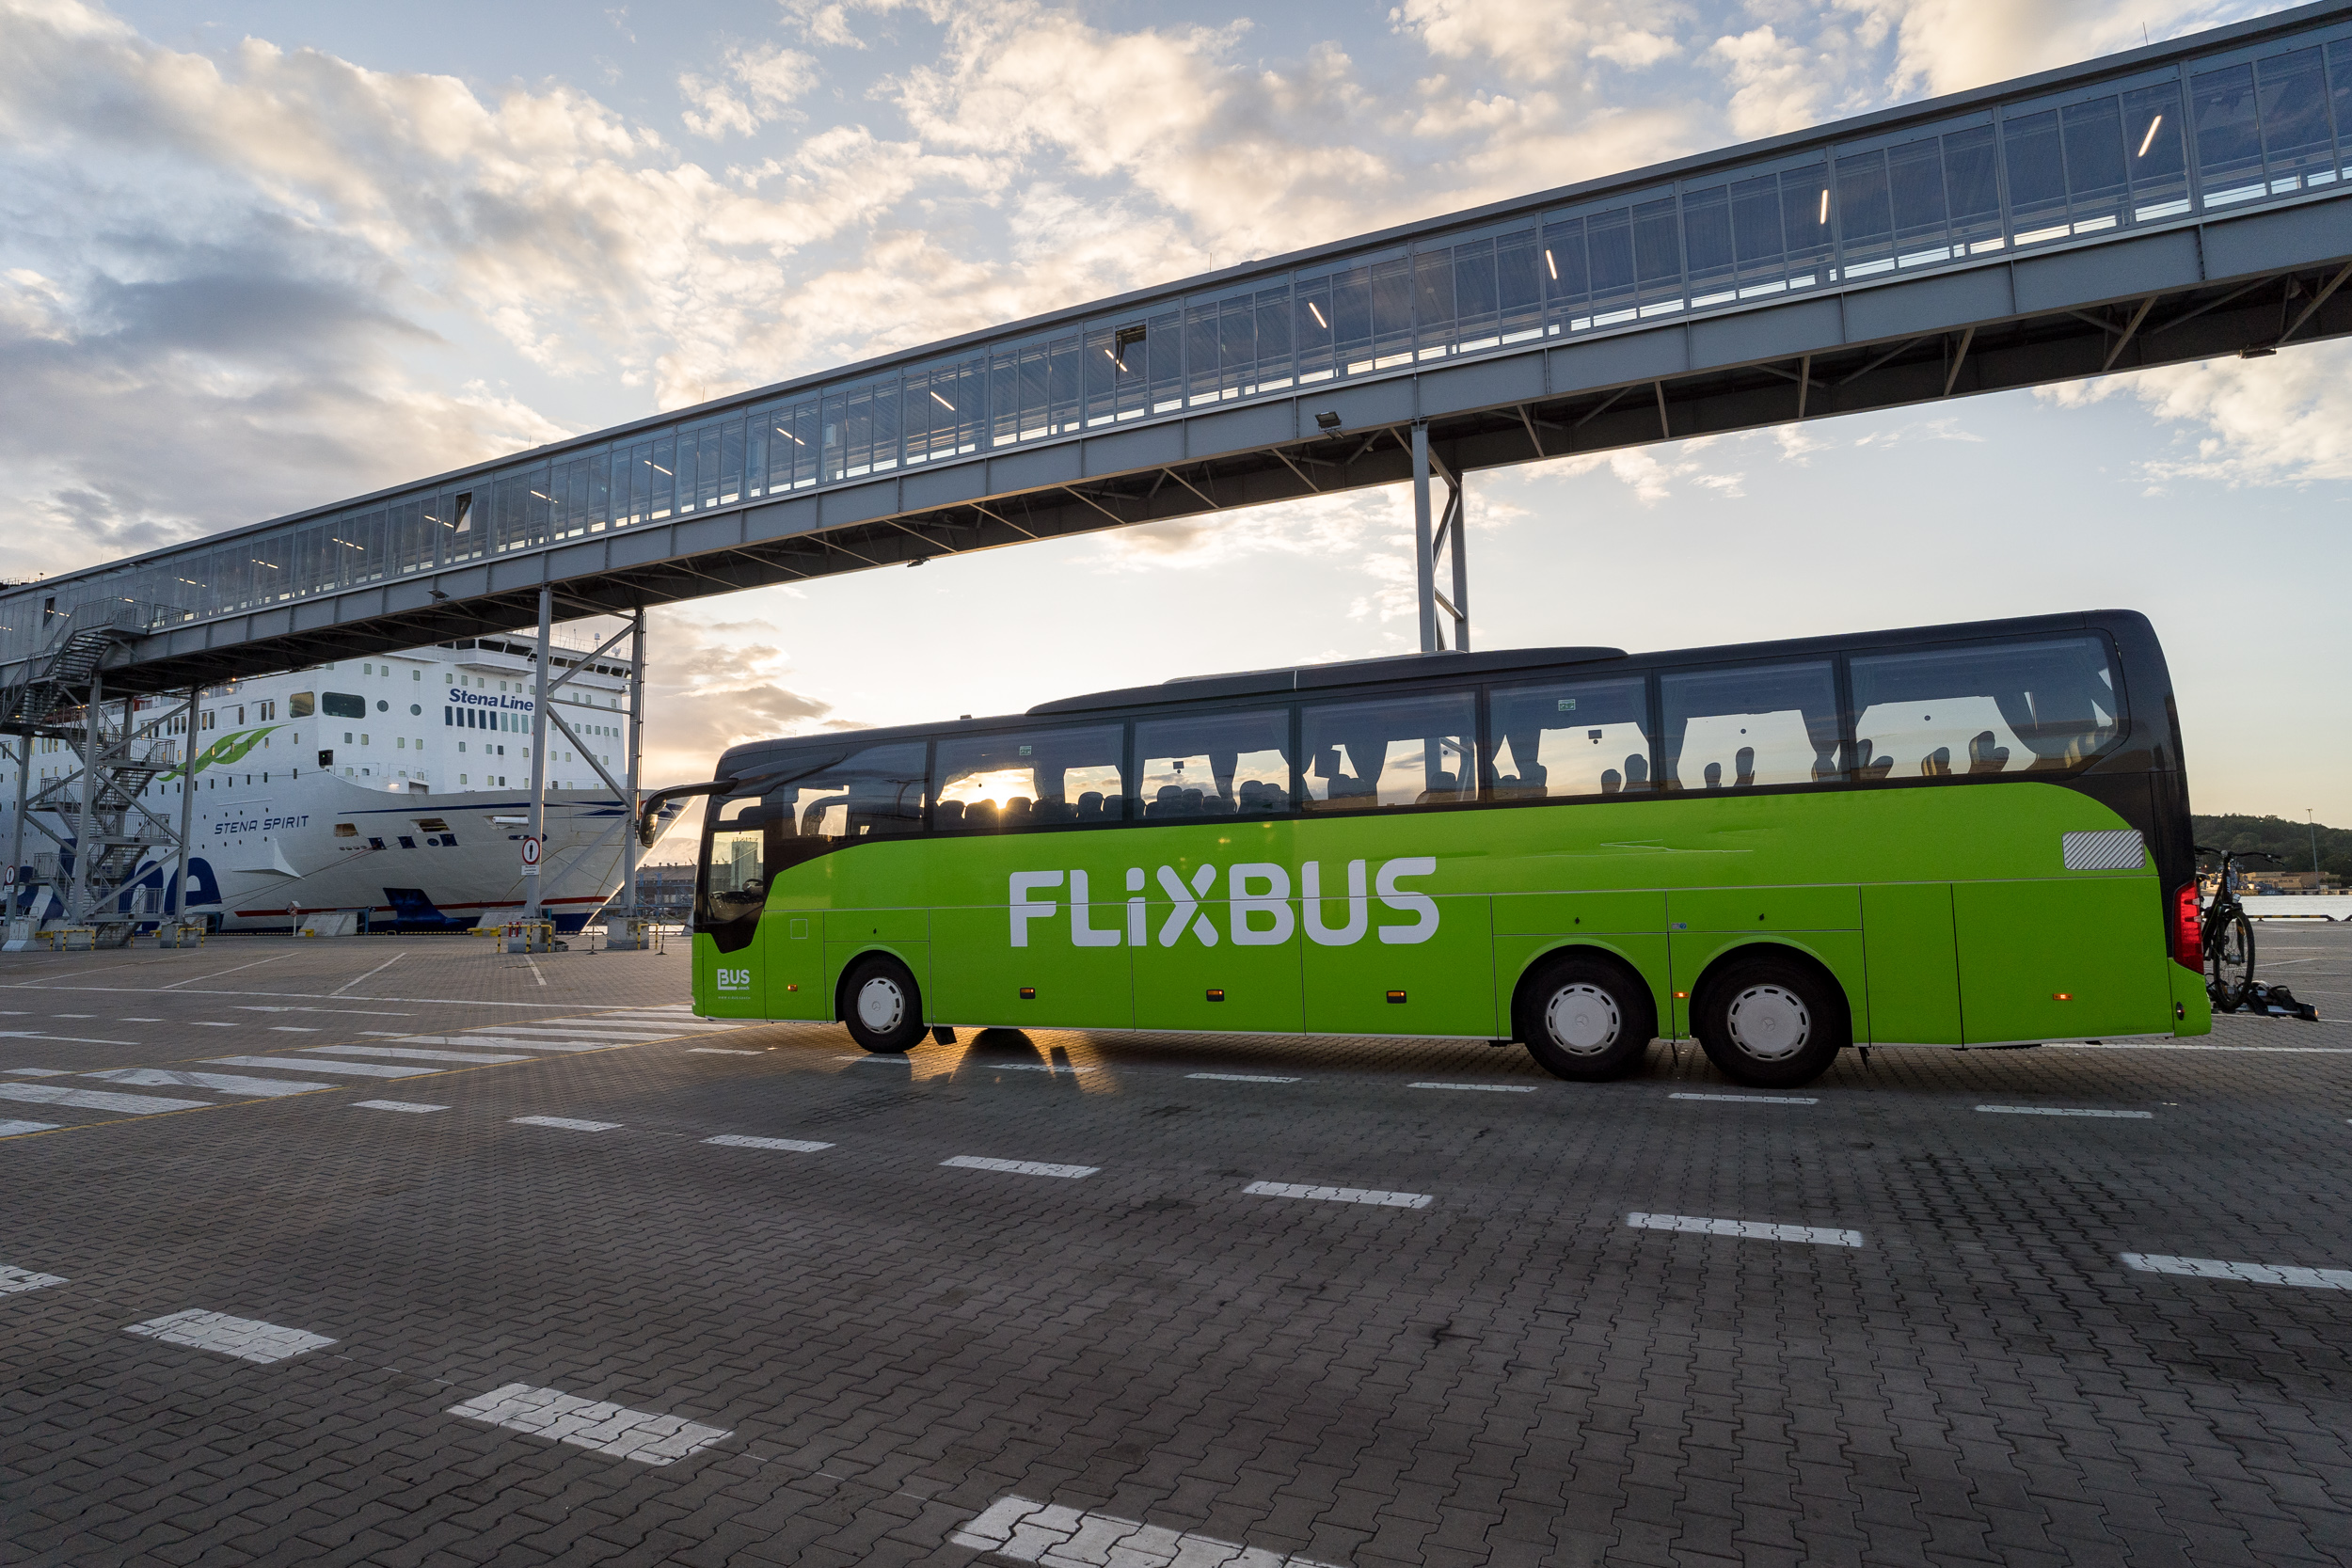 Autobus FlixBus na przystani promowej, obok stoi prom.